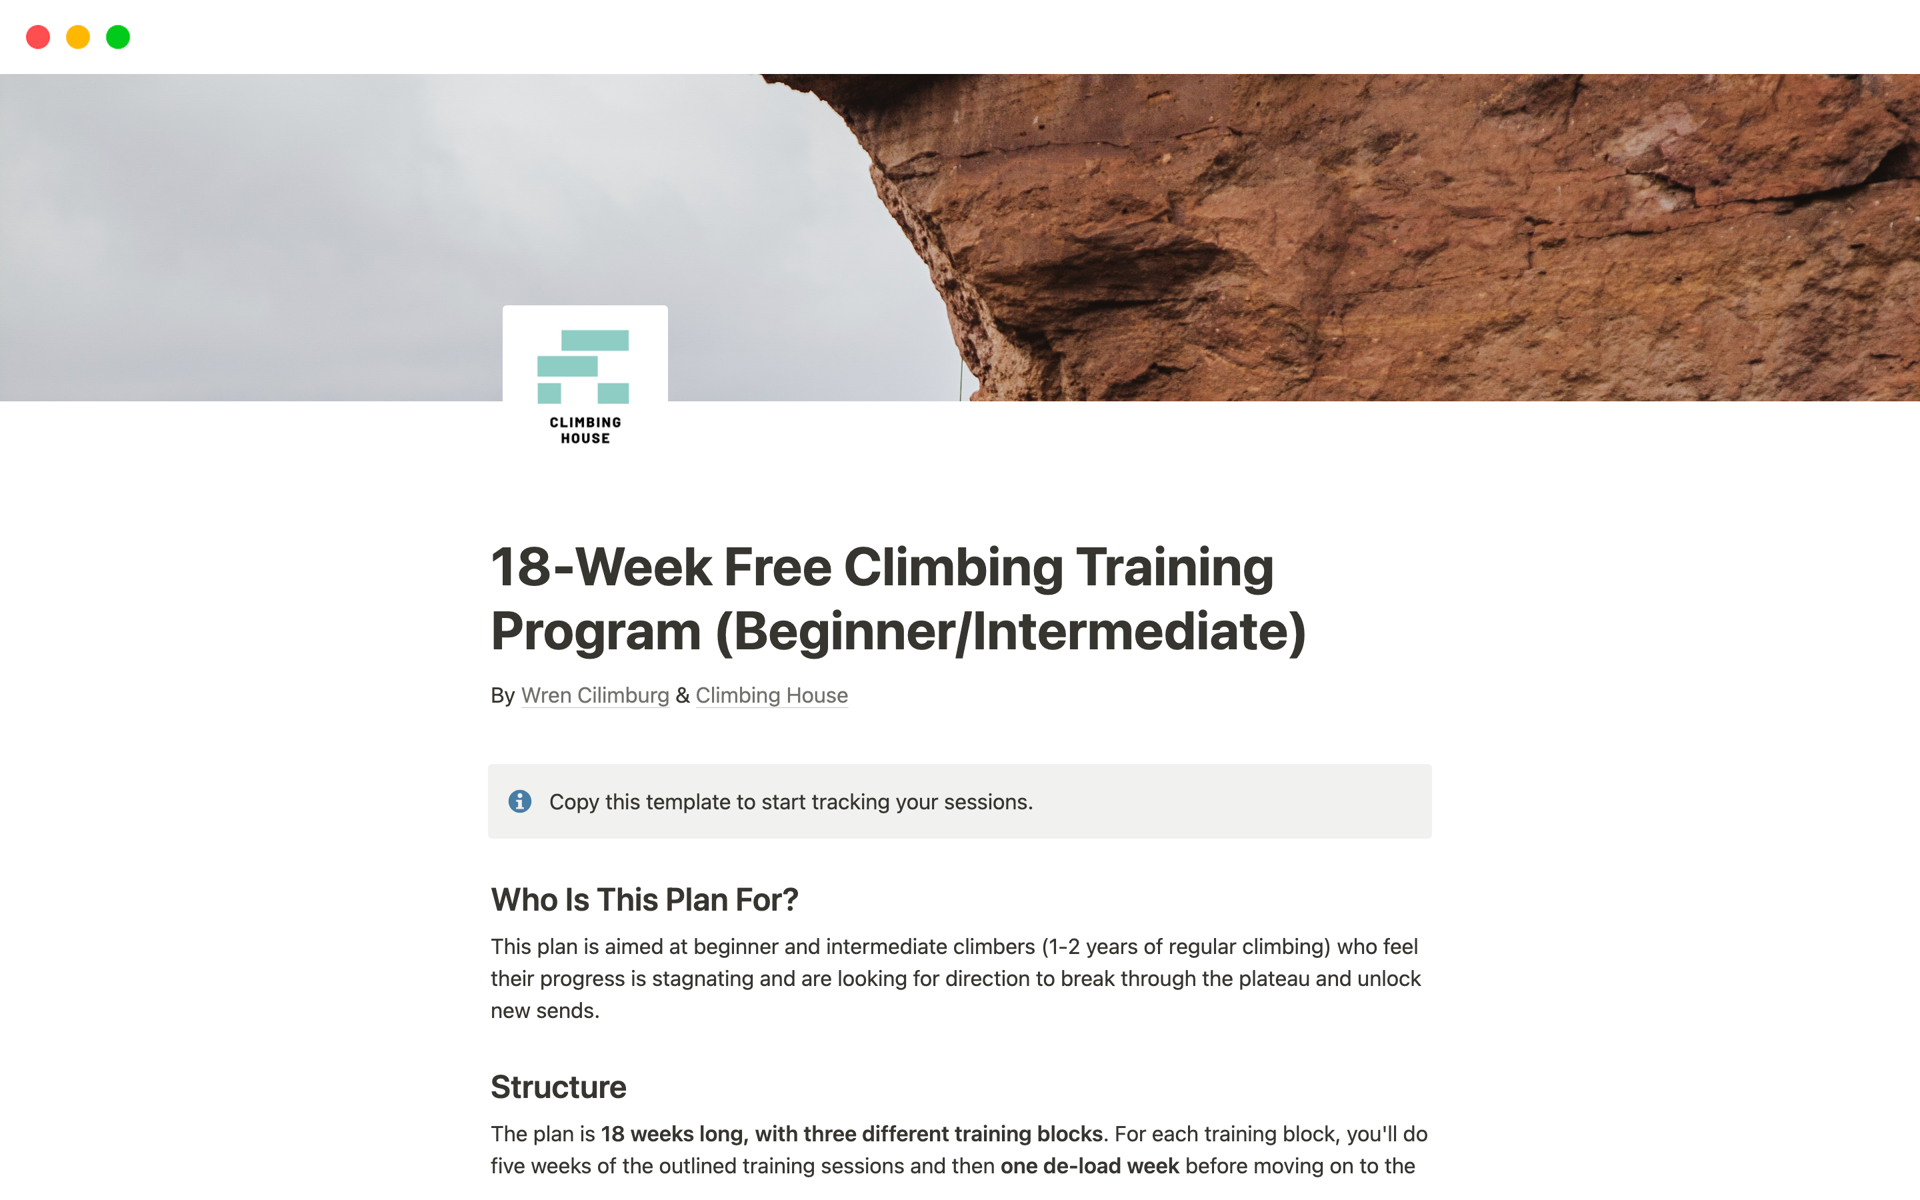 Detailed 18-week climbing training program for beginner and intermediate climbers. 